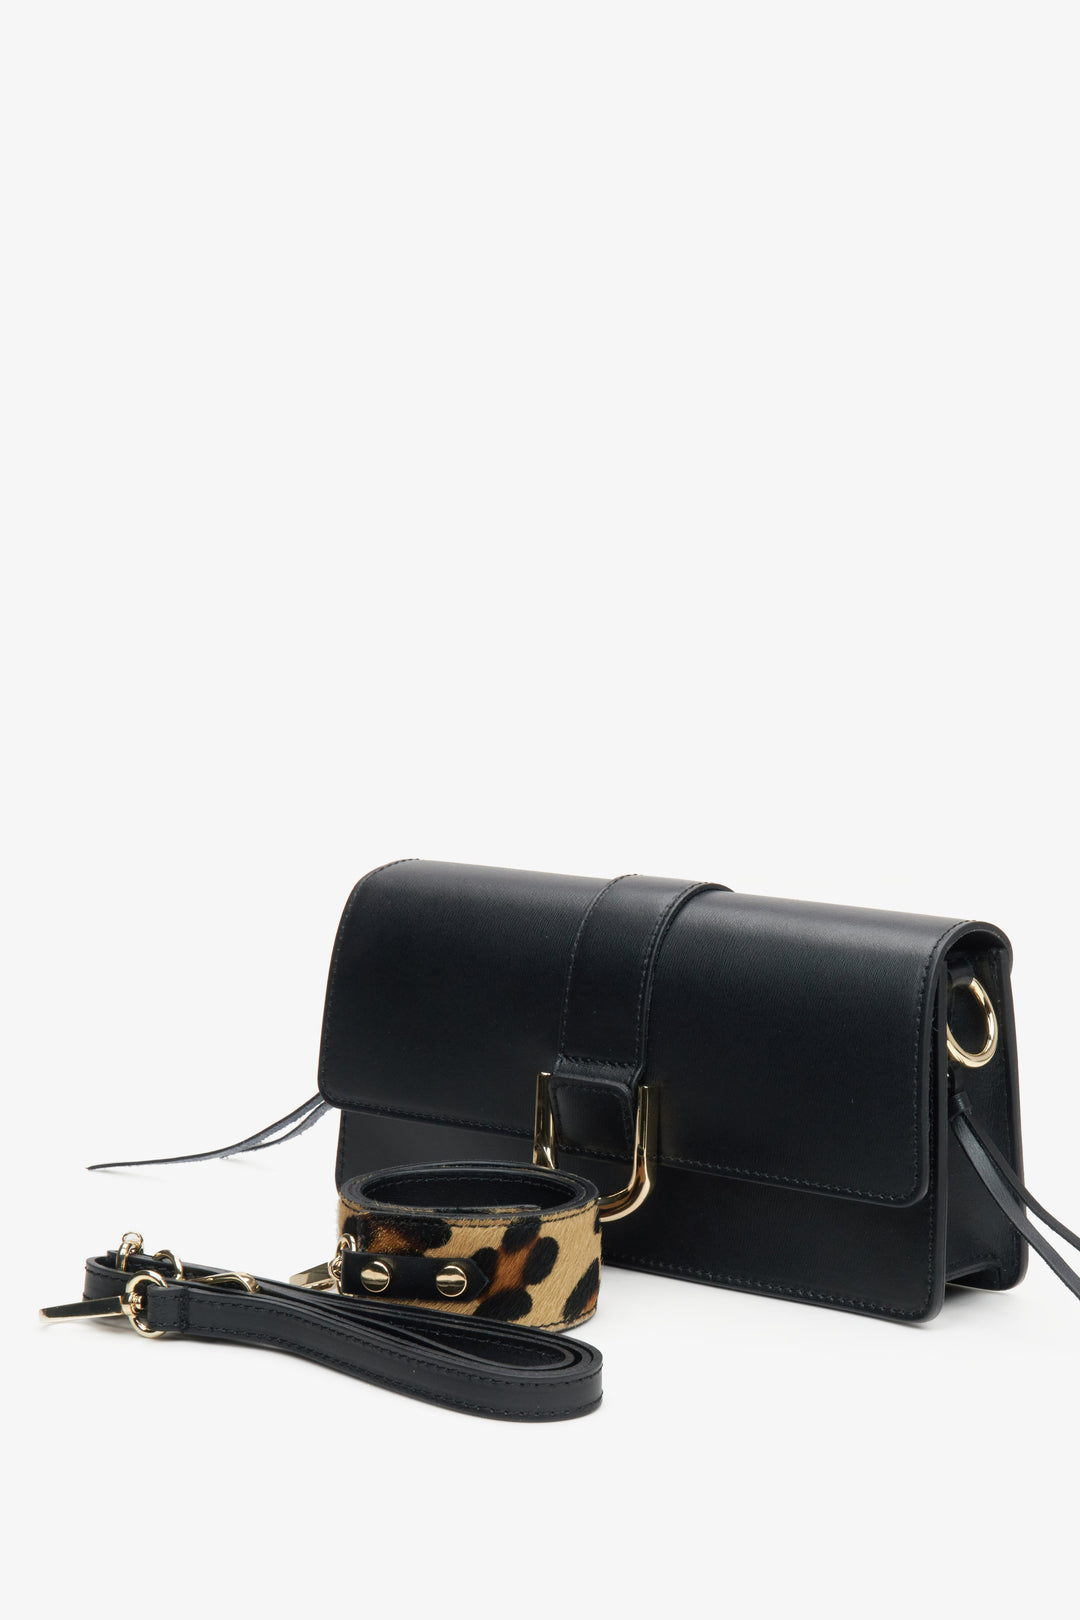 Women's black handbag Estro with animal prints.